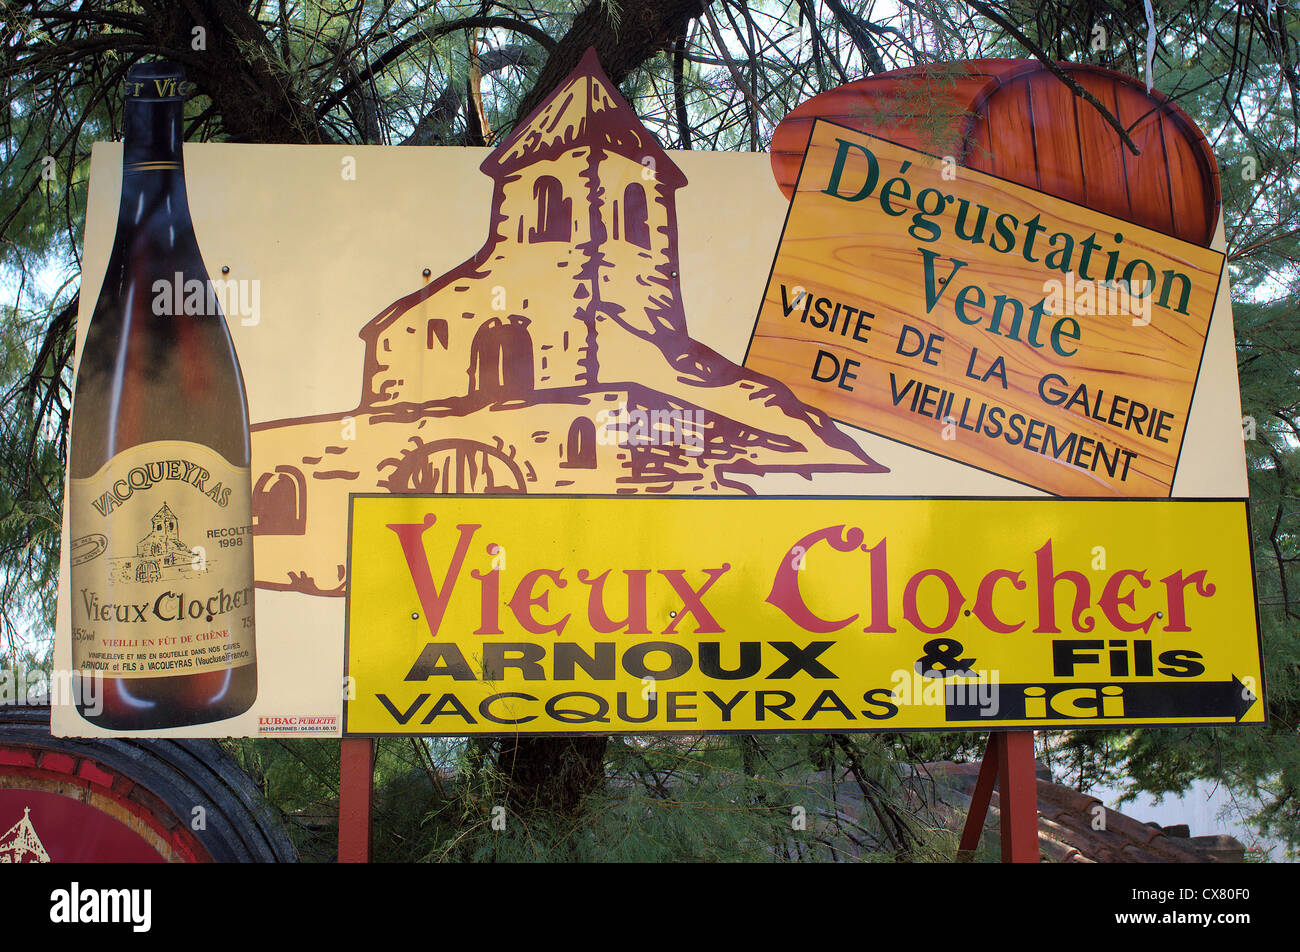 Vacqueyras Vaucluse Provence France famous wine apellation Stock Photo